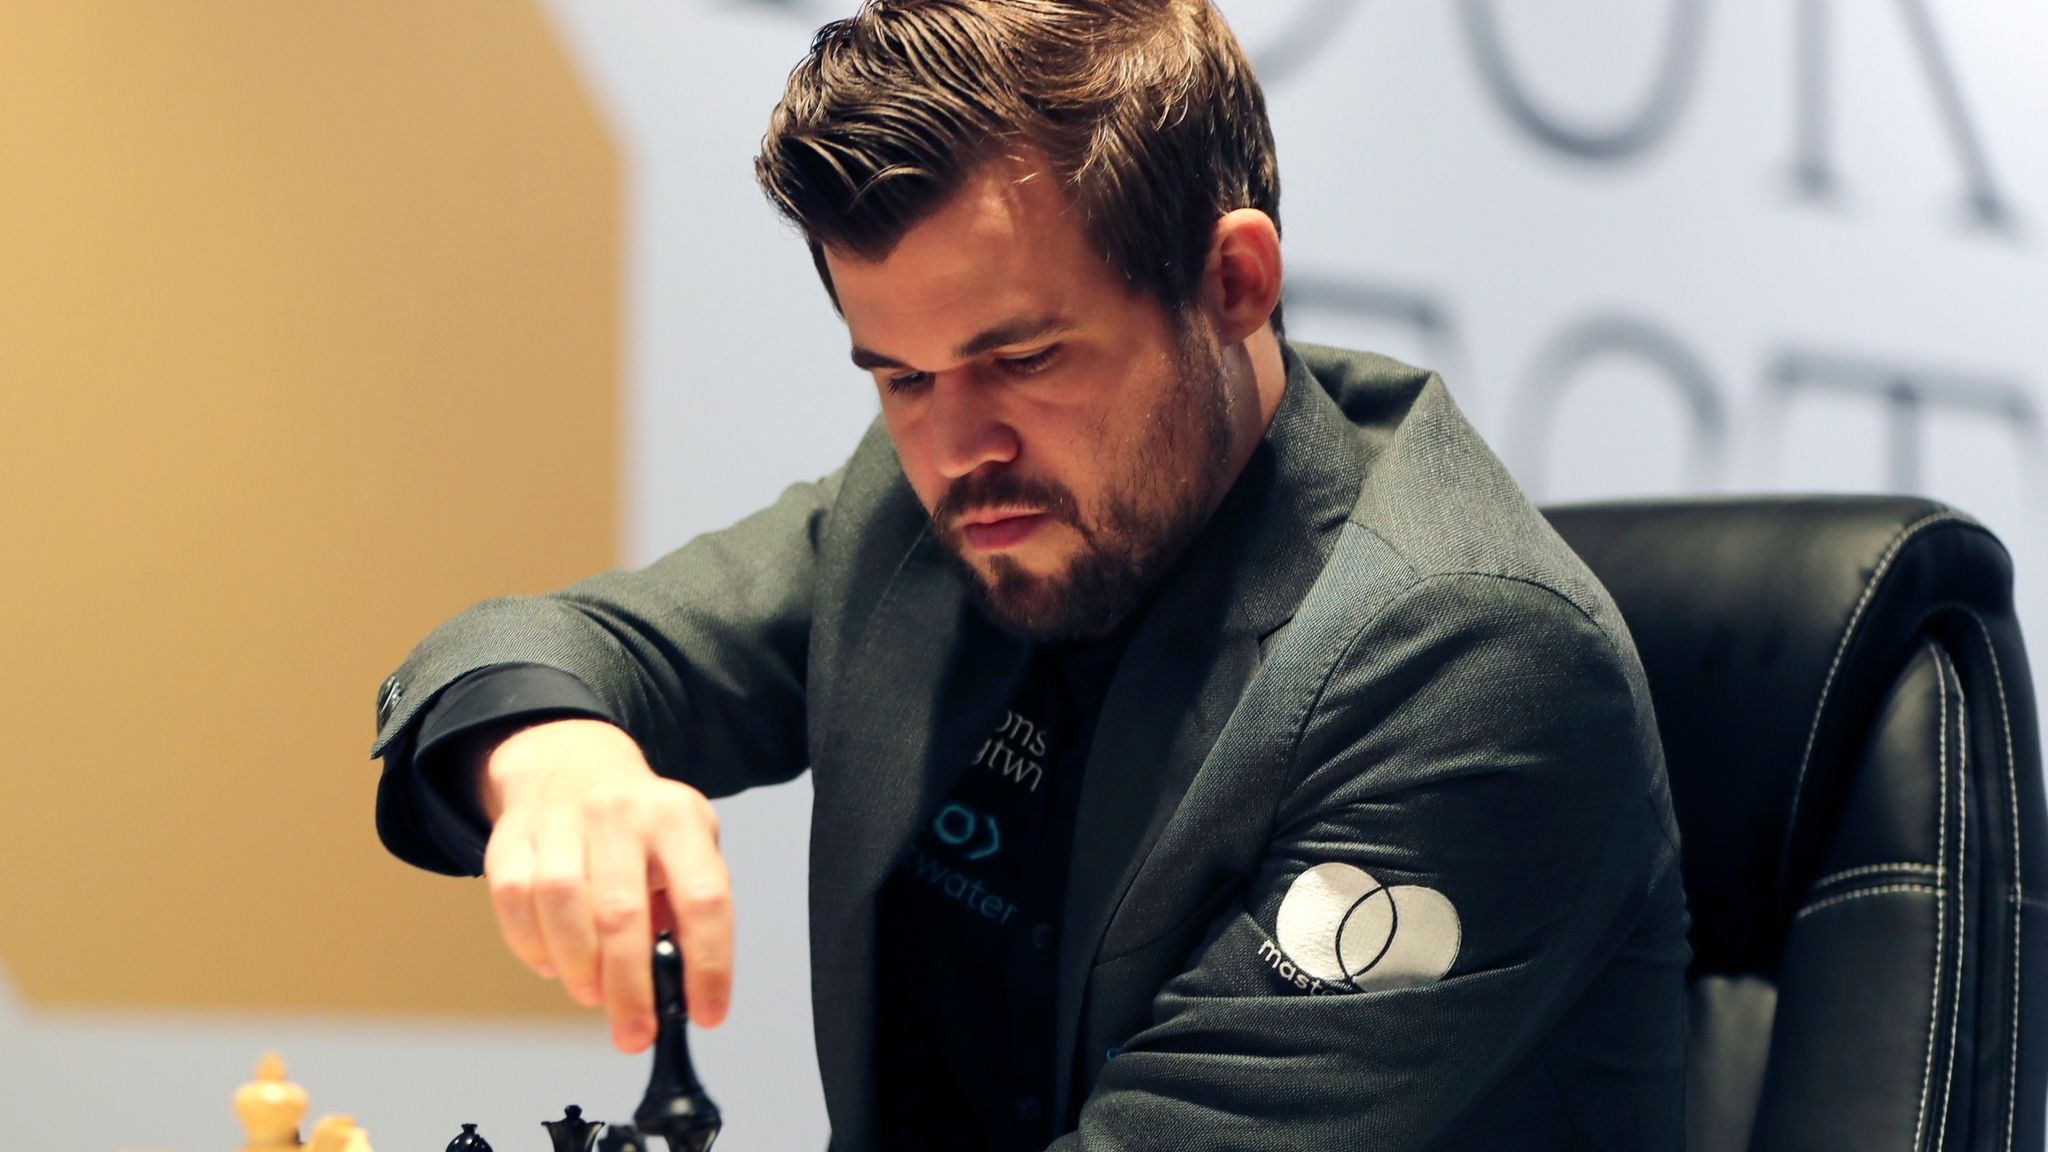 ChessMinds on Instagram: This move left Magnus Carlsen stunned 🤯